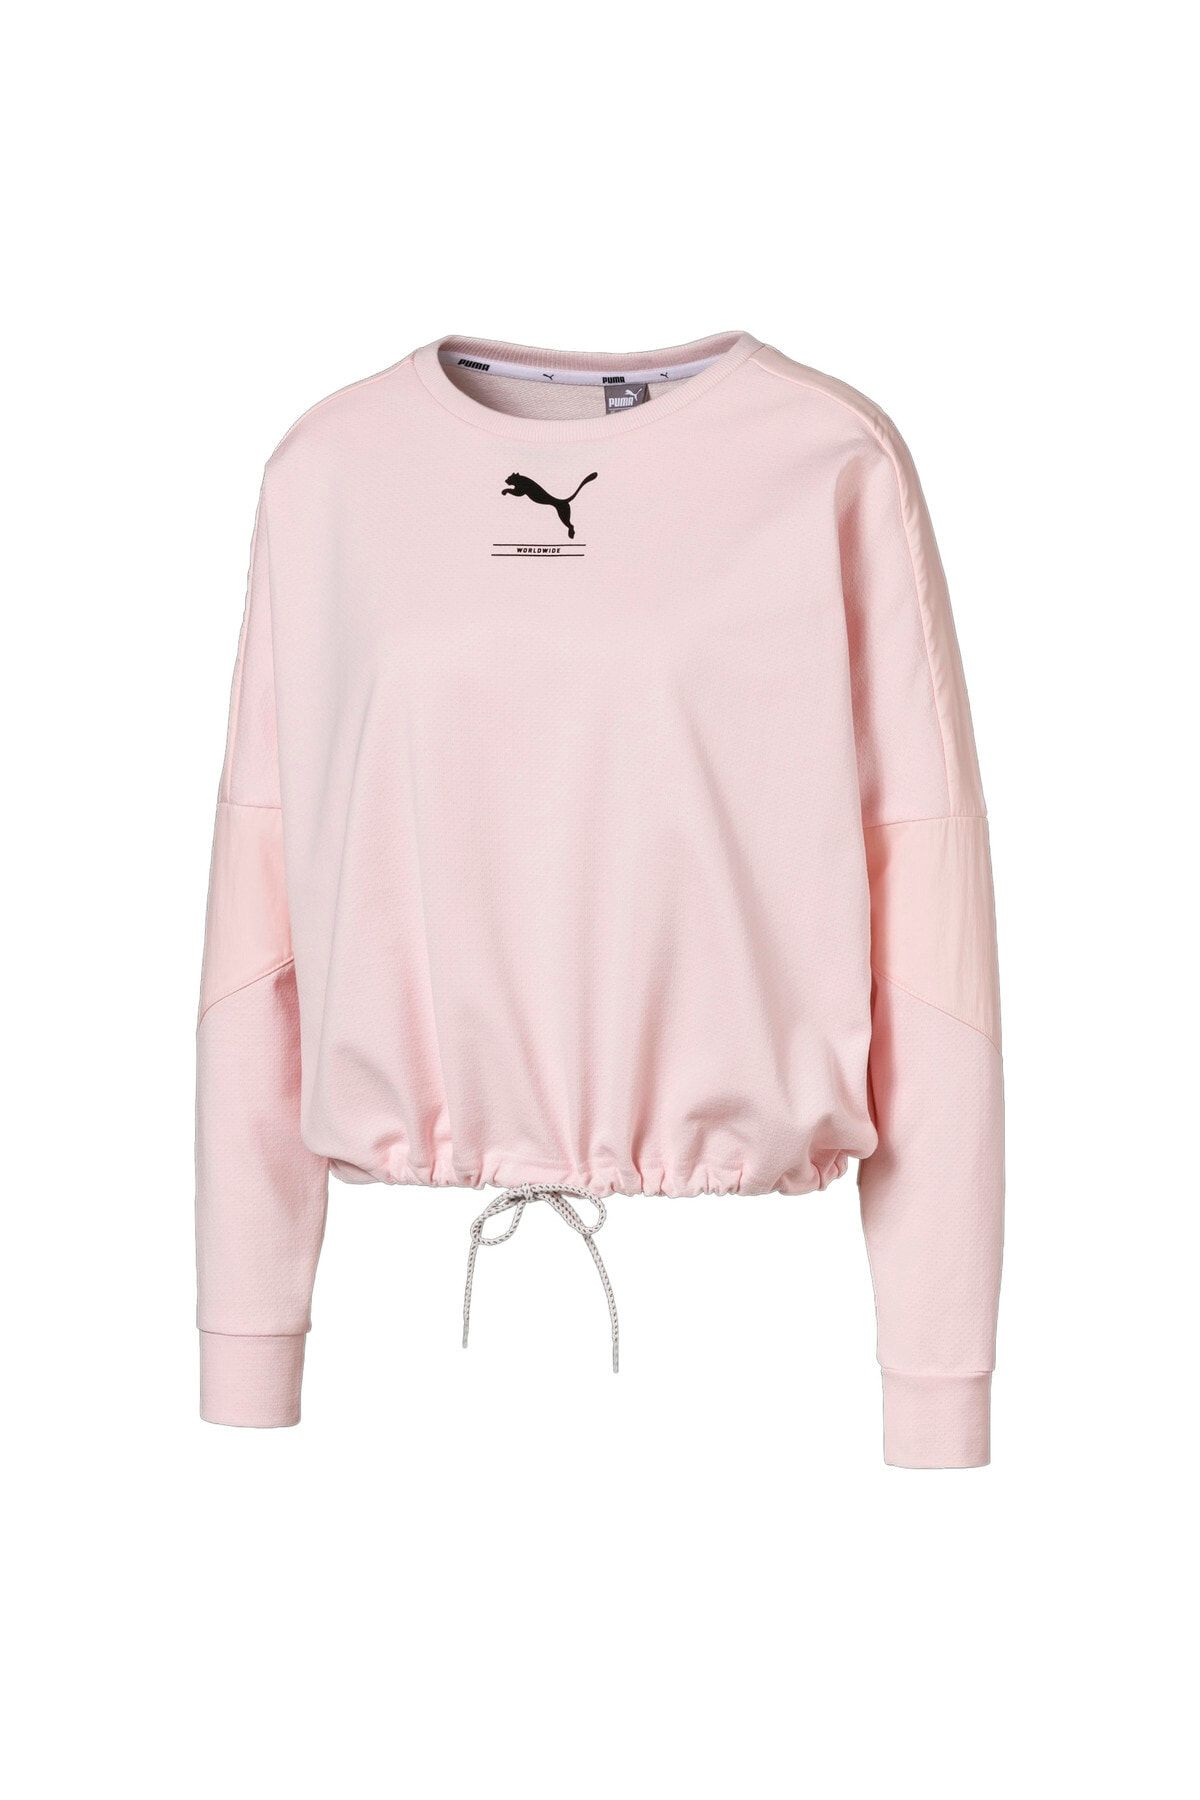 Puma Kadın Spor Sweatshirt - NU-TILITY - 58137817